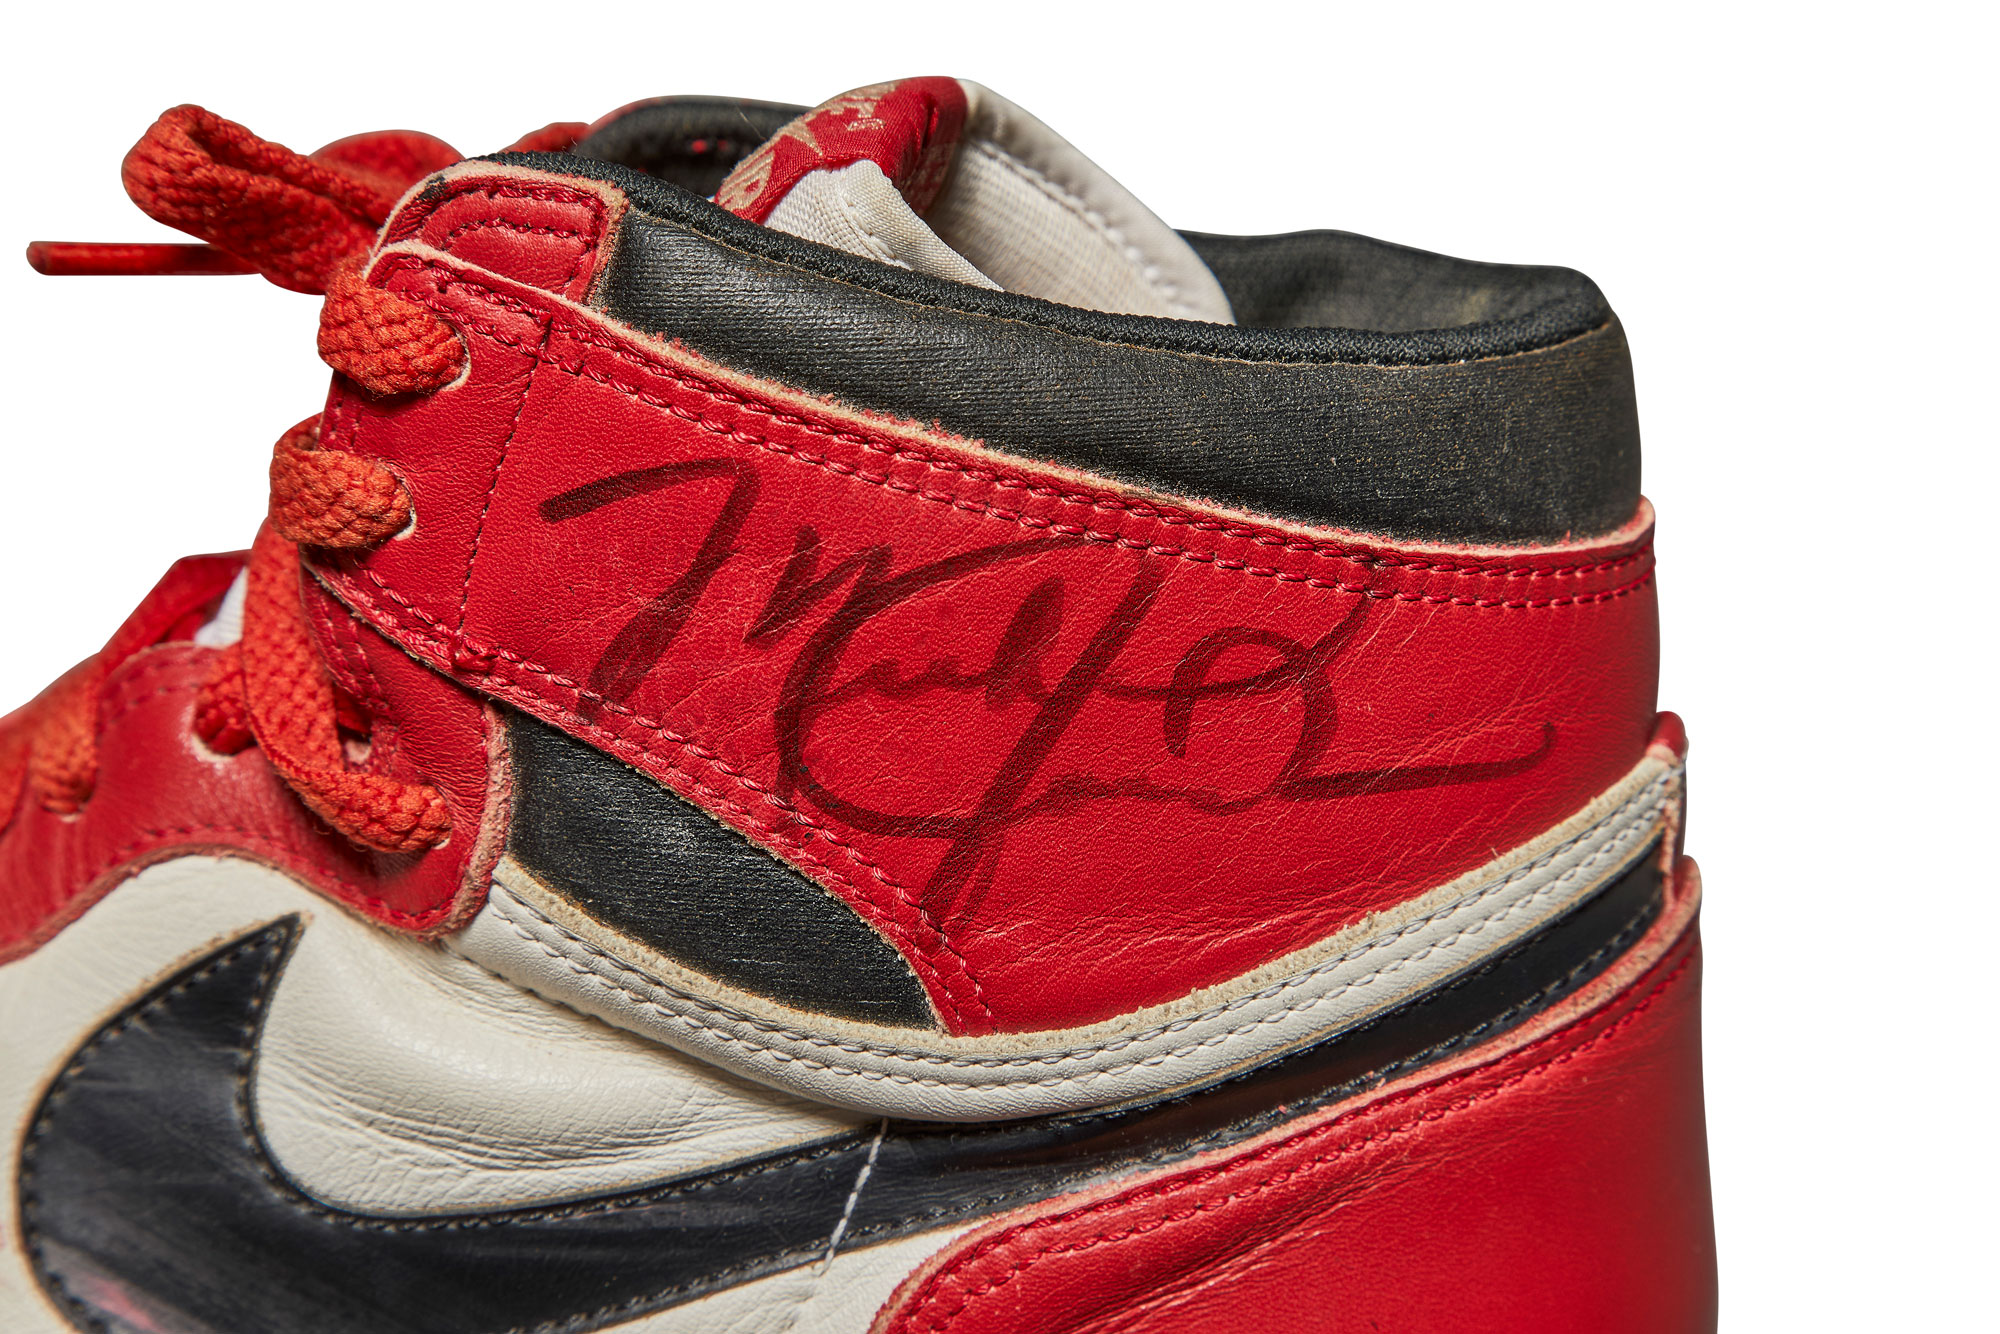 upražnjeno mjesto disciplina ograničenja  Michael Jordan's signature Air Jordan shoes from 1985 sell for  record-breaking price, Sotheby's says - CNN Style